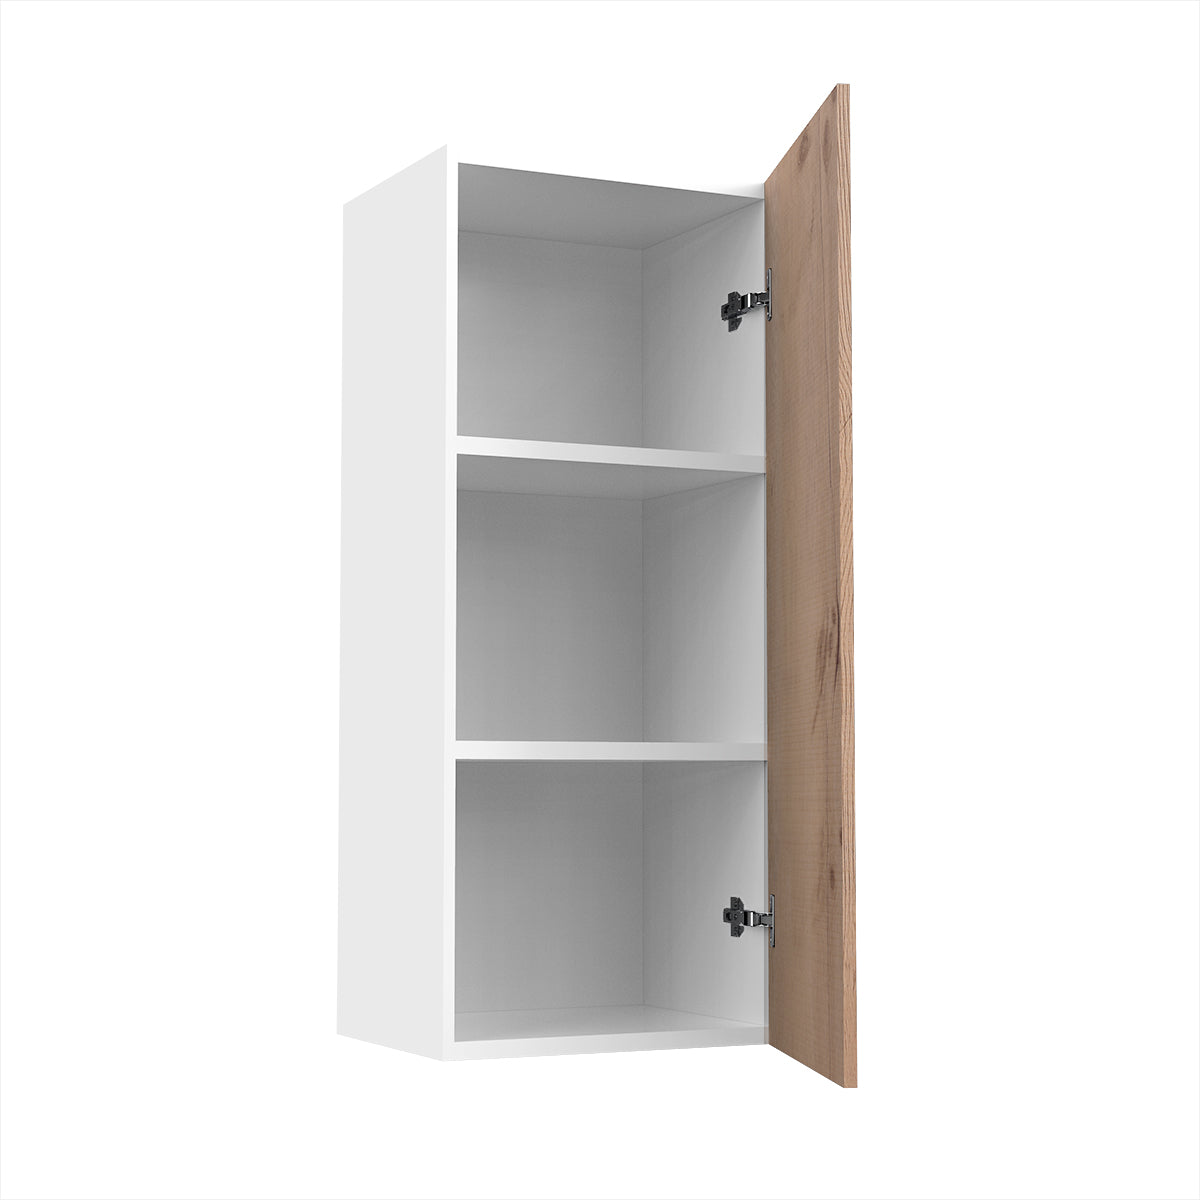 RTA - Rustic Oak - Single Door Wall Cabinets | 15"W x 36"H x 12"D